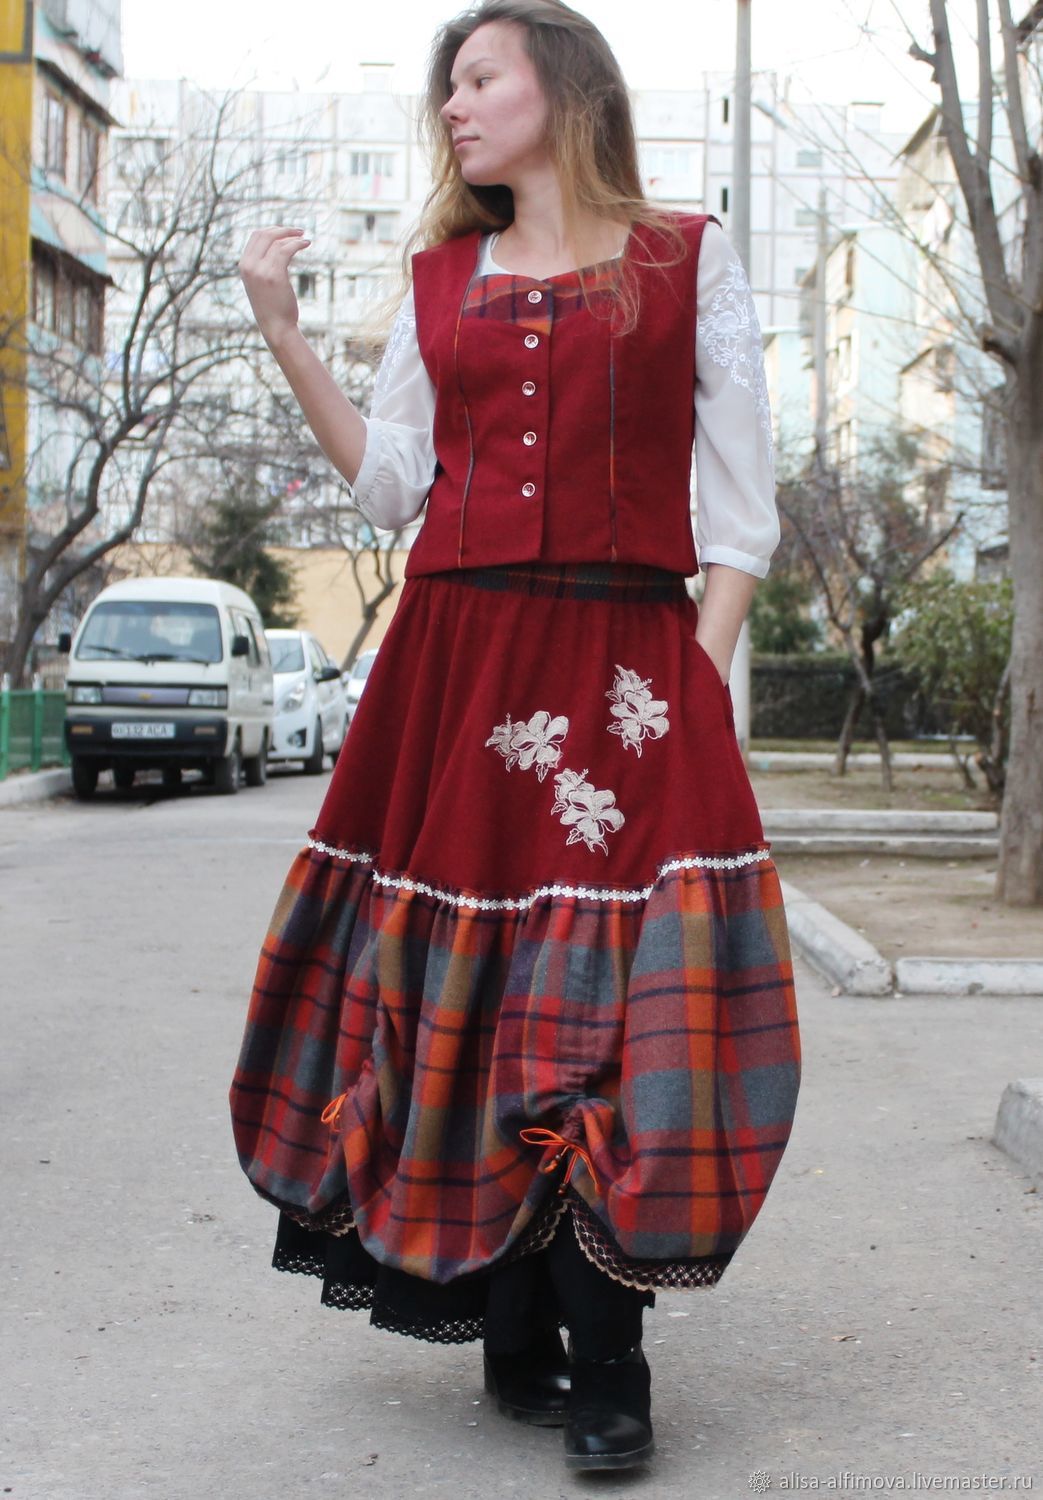 Boho suit 'Arish' (skirt and vest), Dresses, Tashkent,  Фото №1